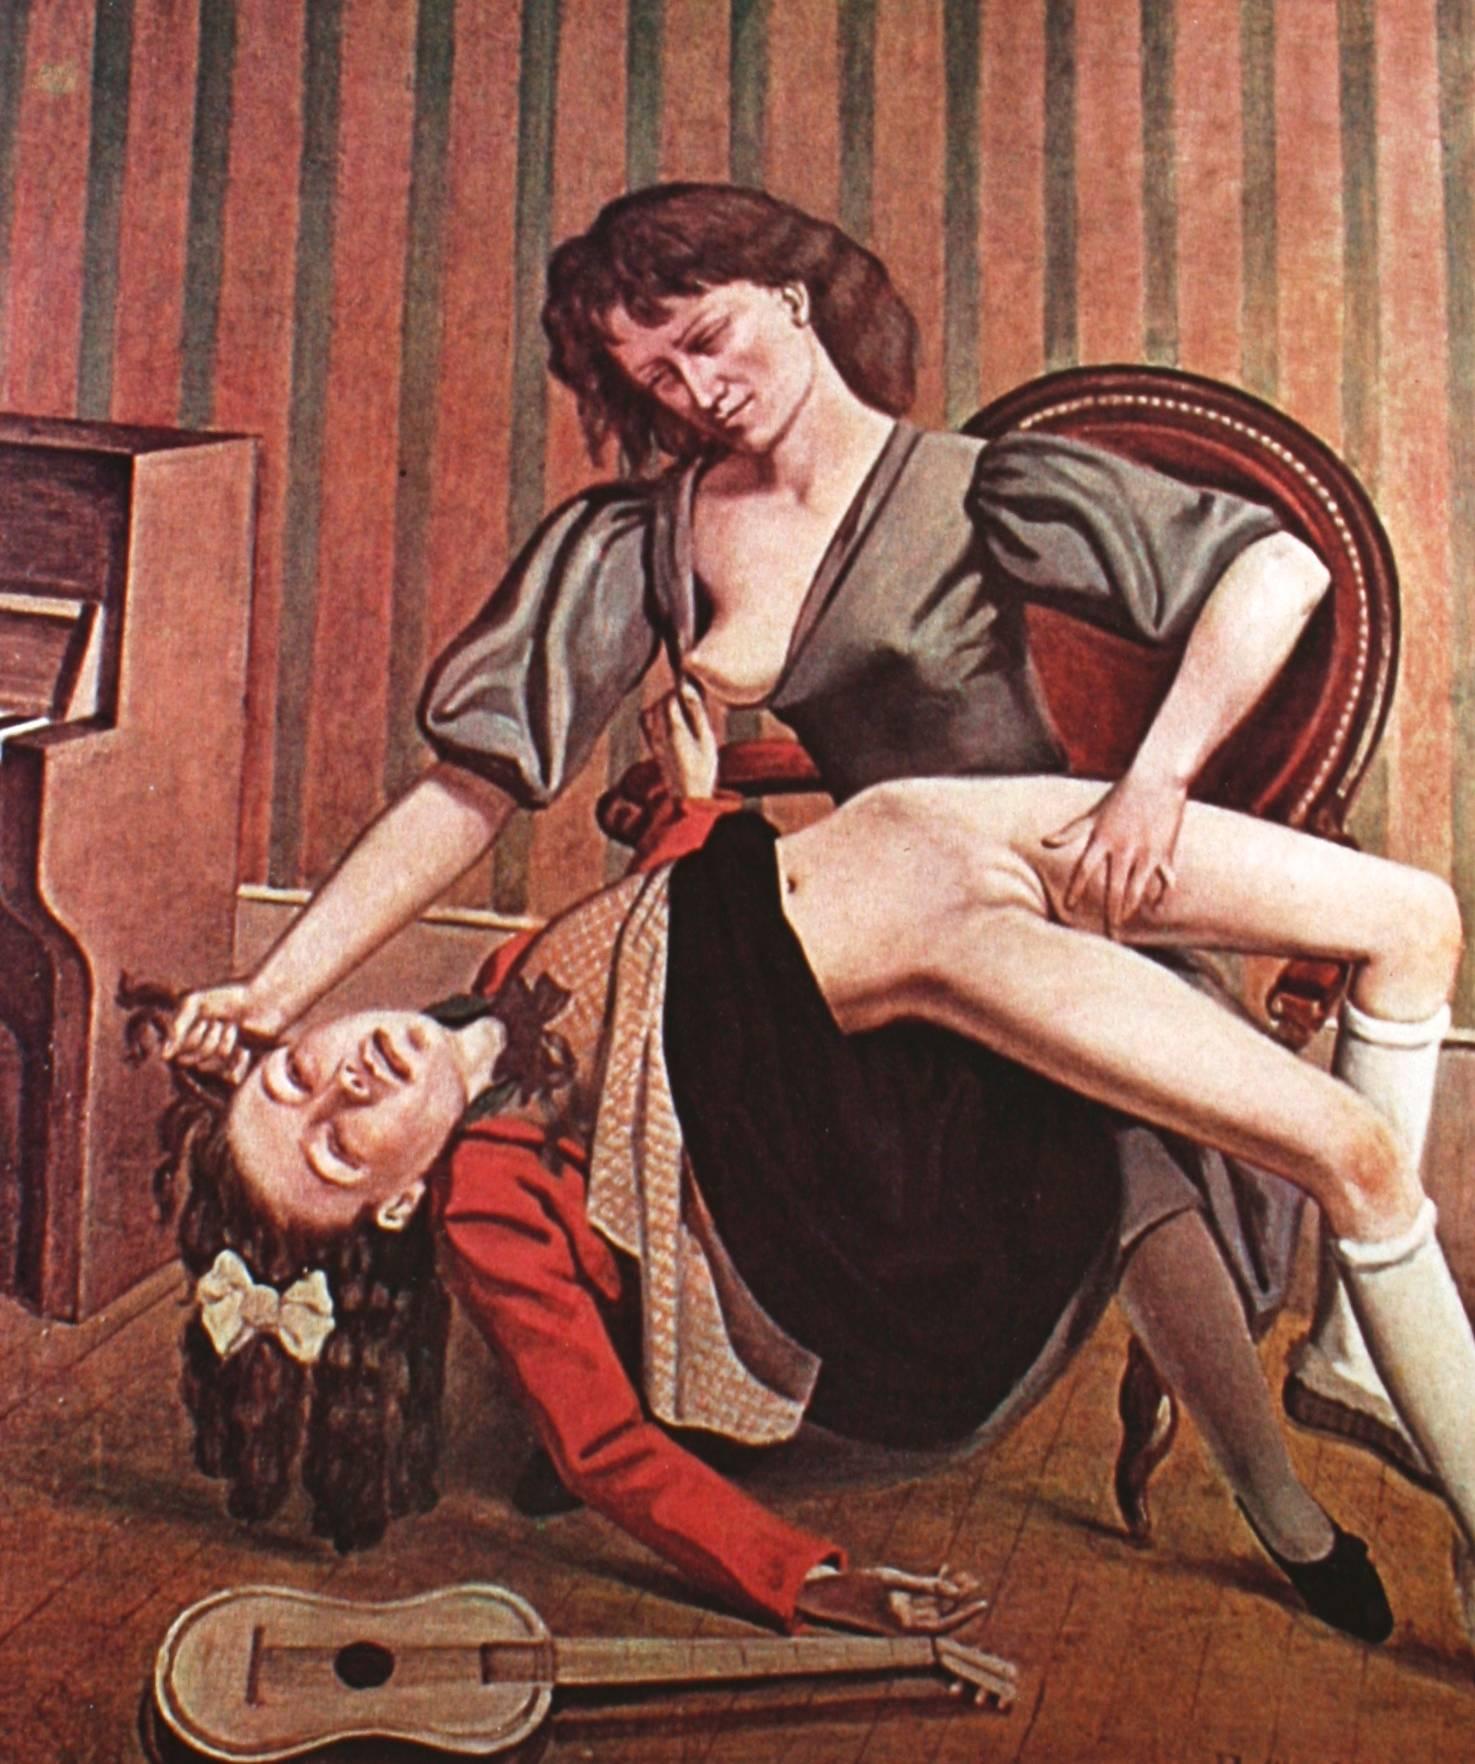 Erotic paintings 18th century